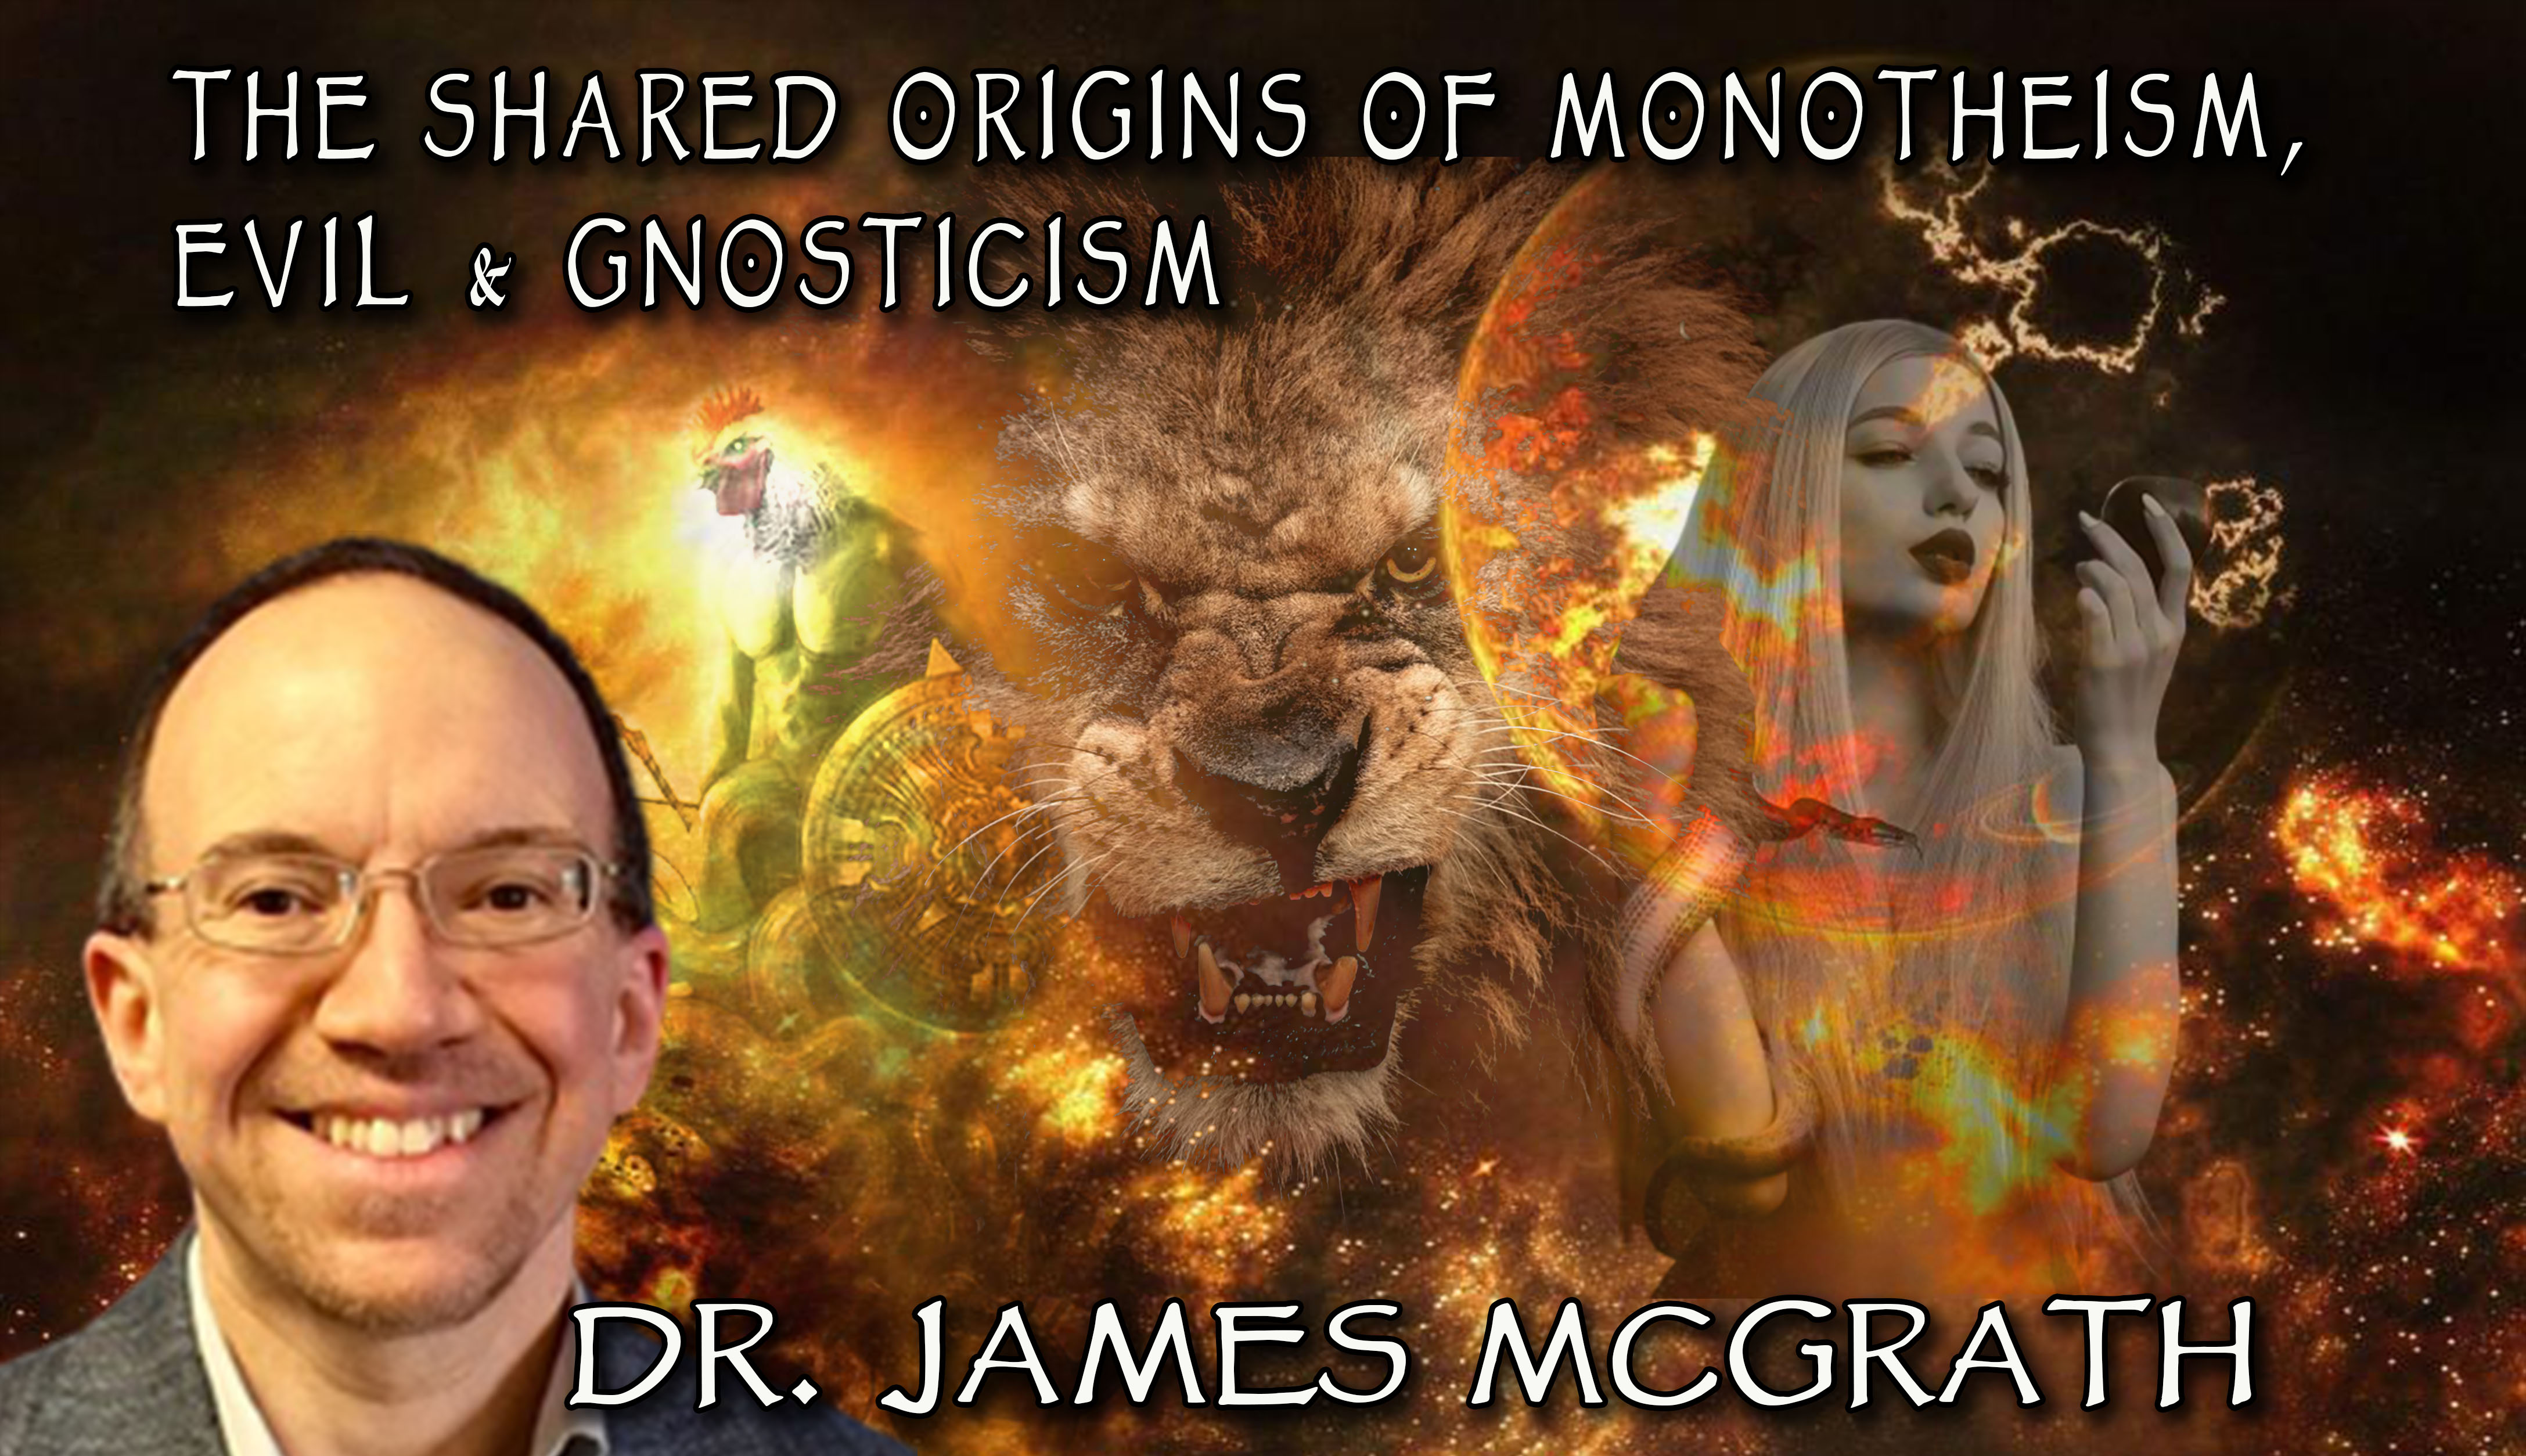 Dr. James McGrath on the Shared Origins of Monotheism, Evil, and Gnosticism